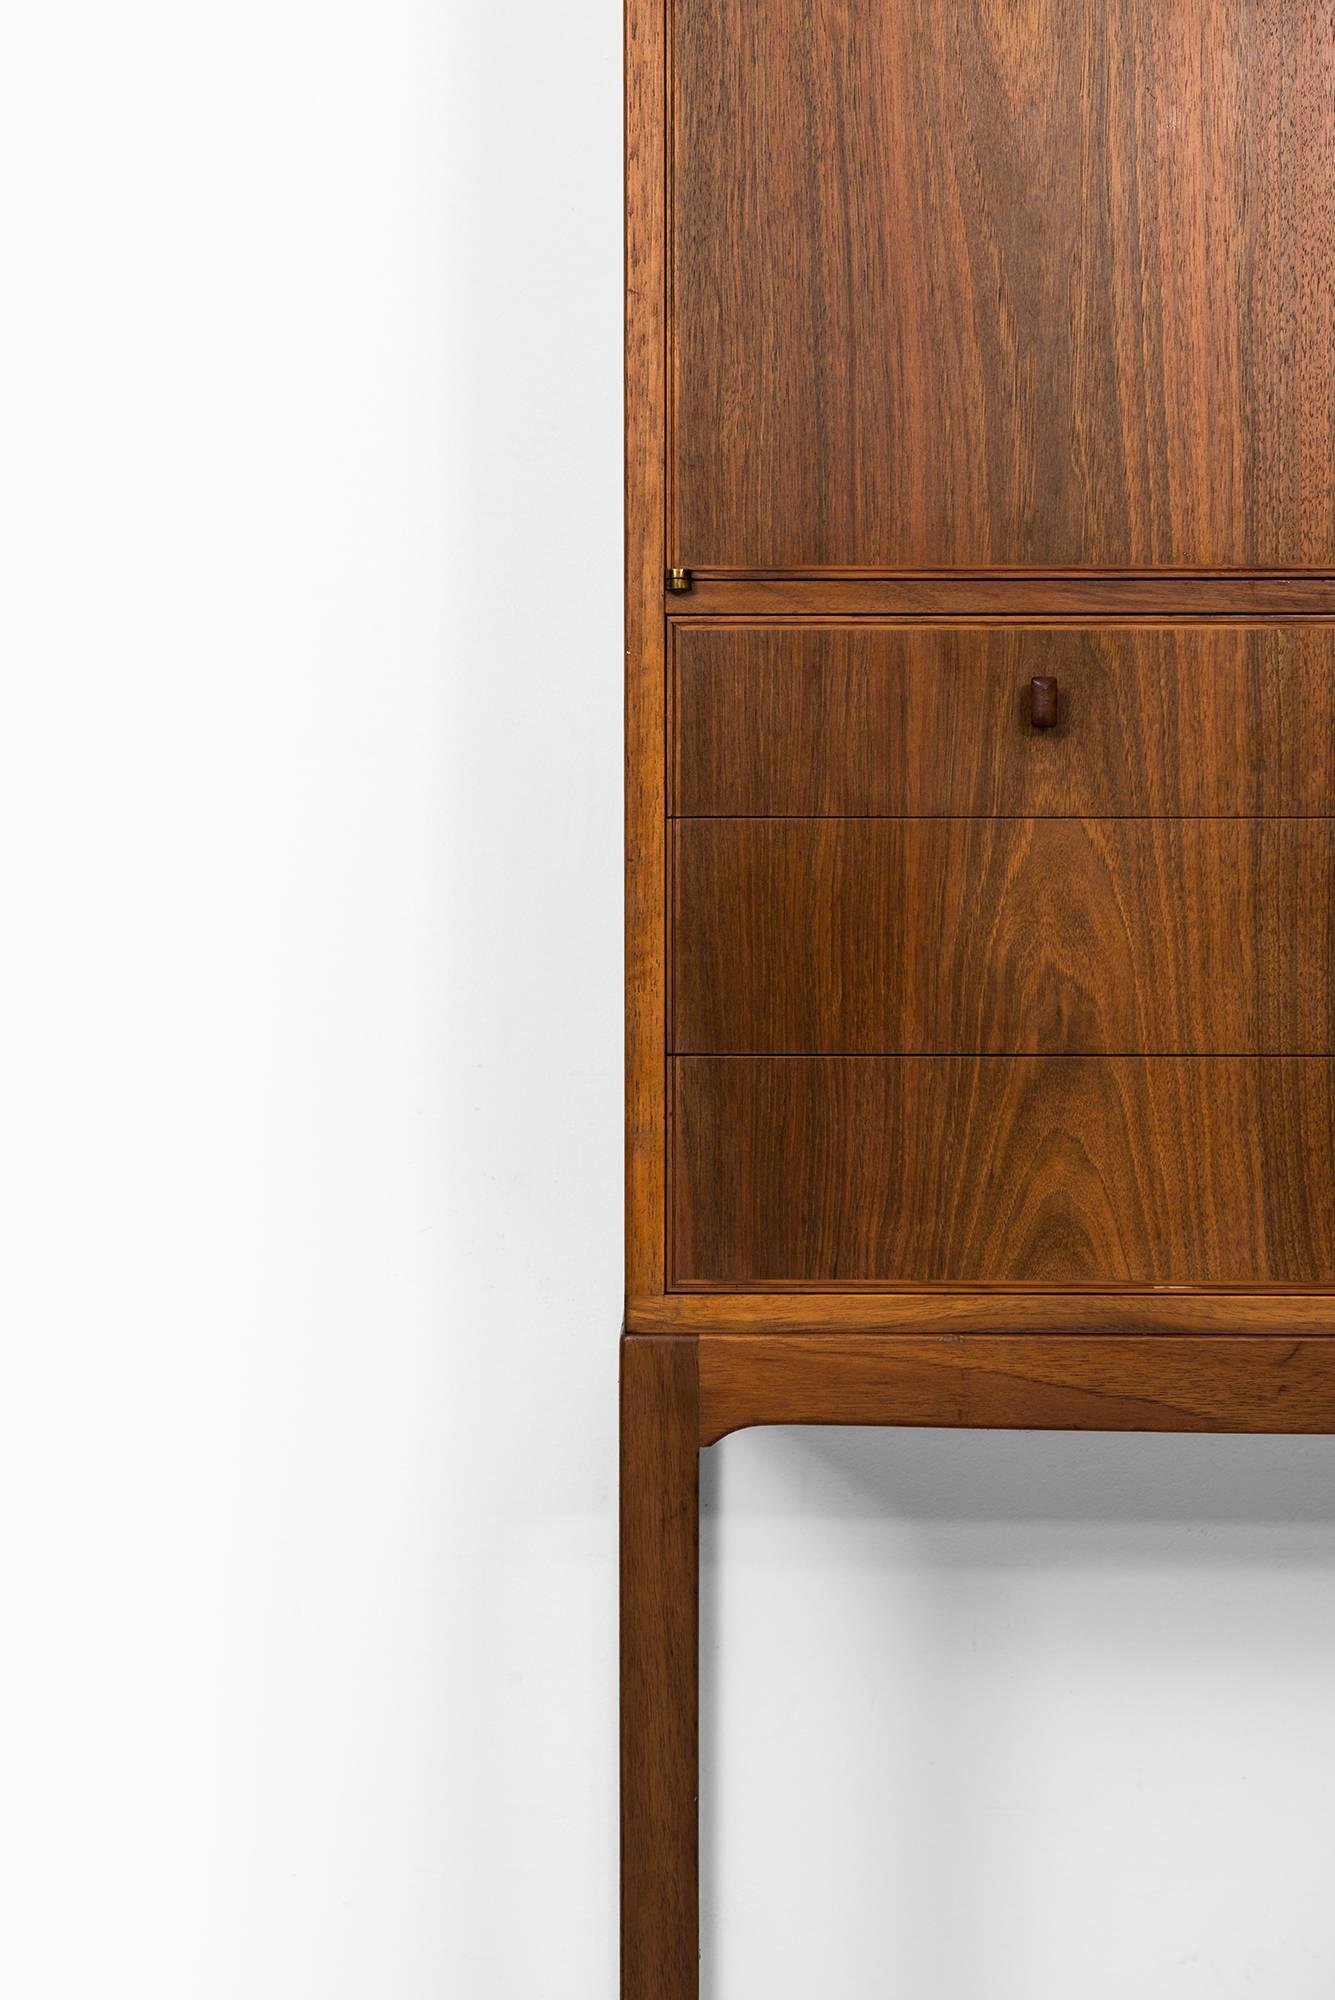 Rare cabinet model Lillbo designed by Carl Malmsten. Produced by Carl Löfving & Söner in Sweden.